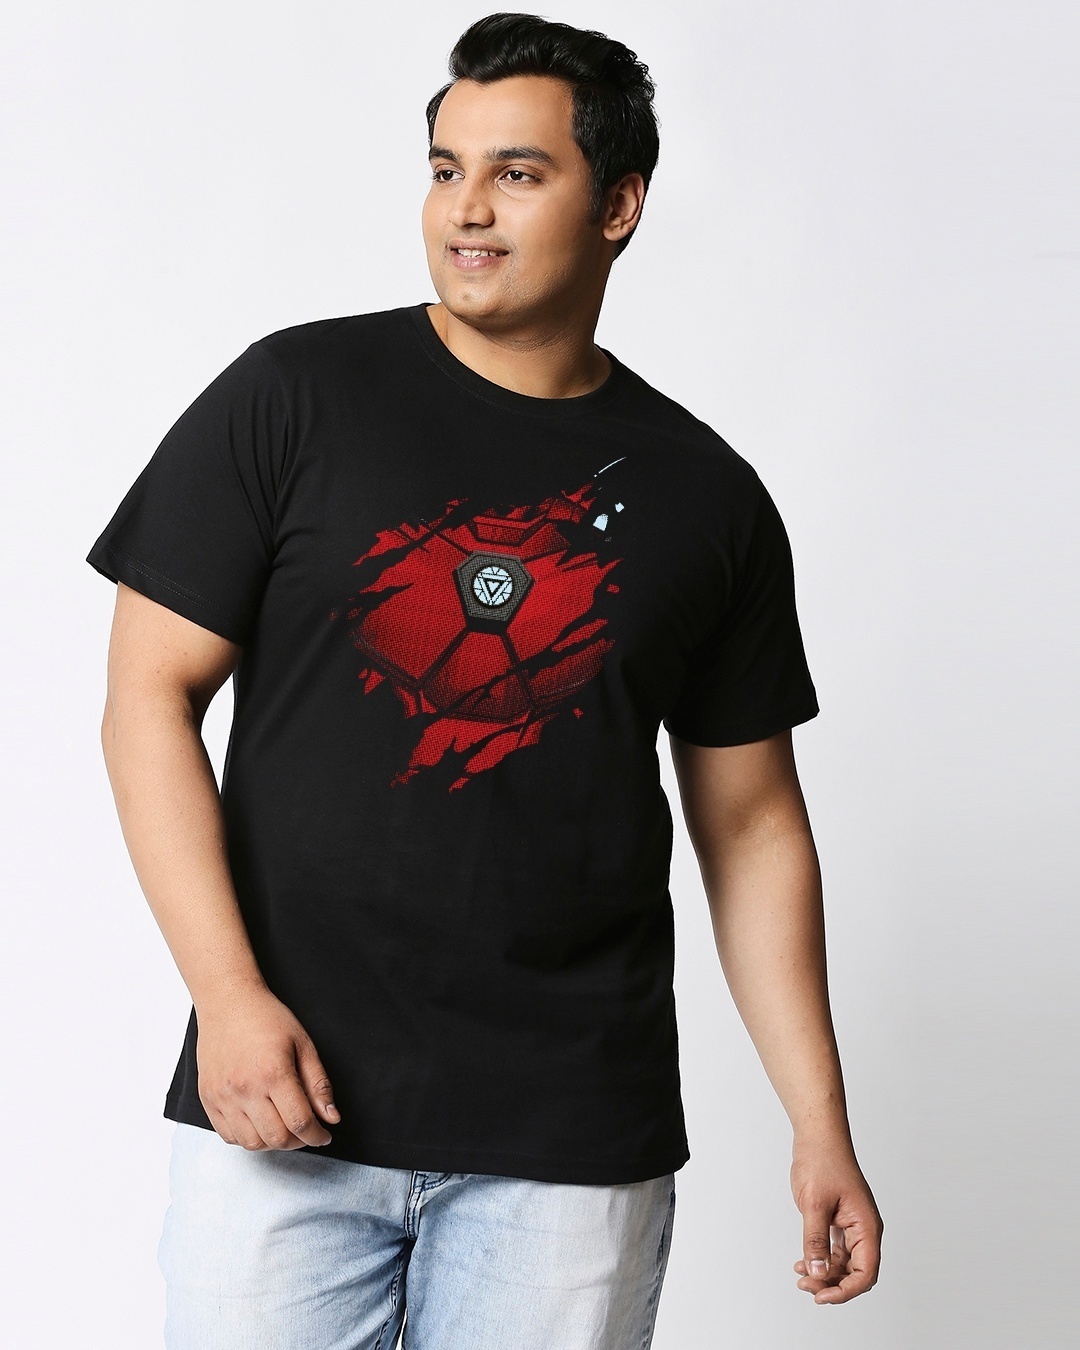 Shop Men's Black Iron Man of War (AVL) Graphic Printed Plus Size T-shirt-Front